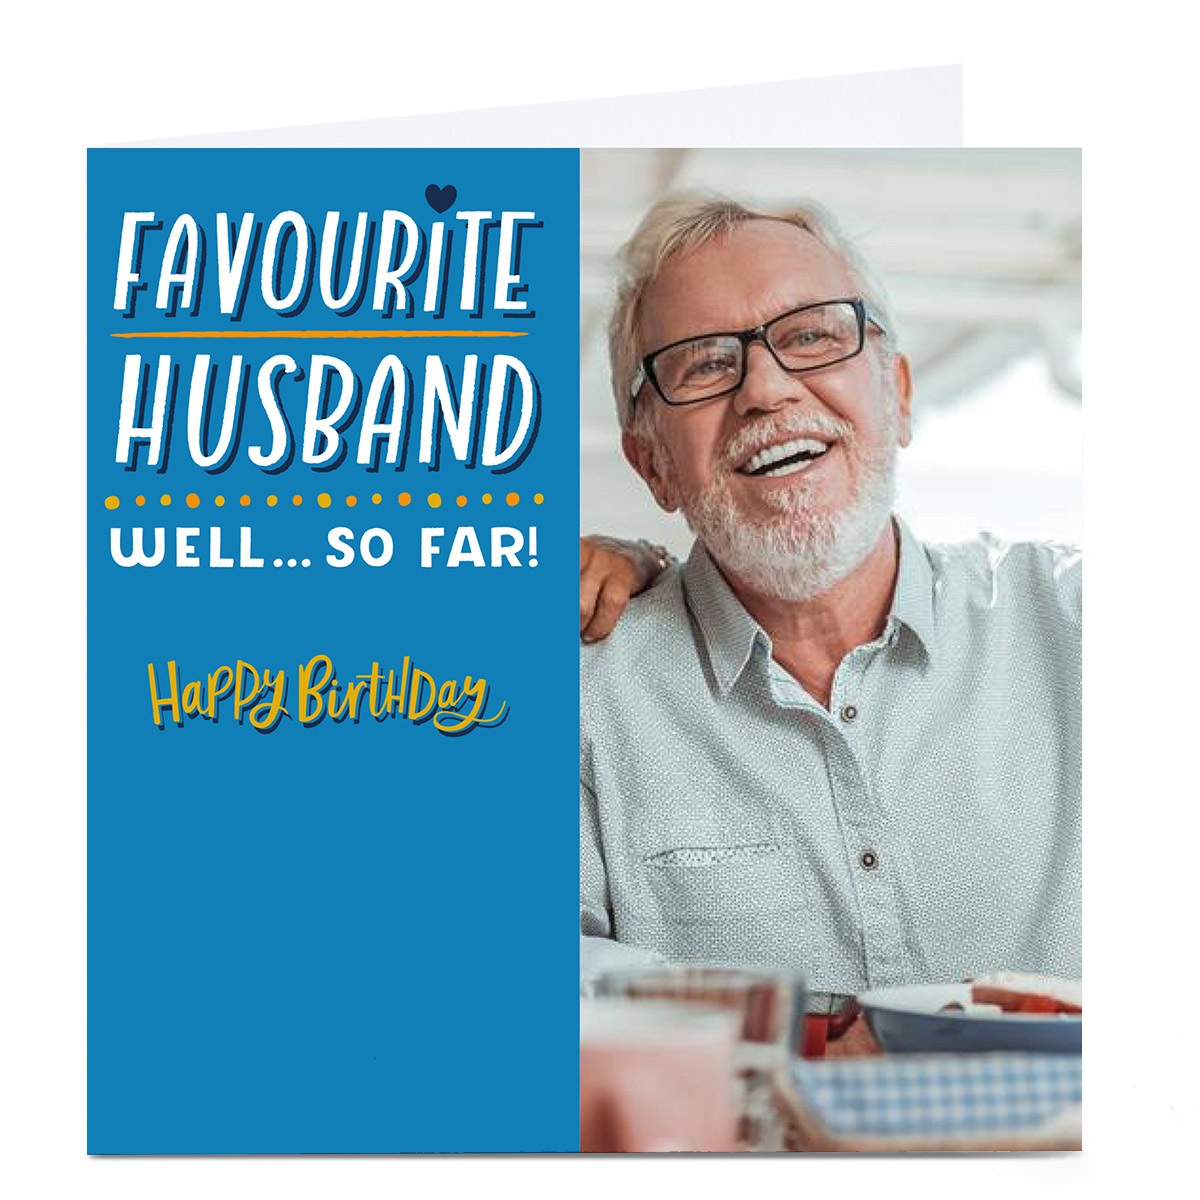 Photo Larger than Life Card - Favourite Husband